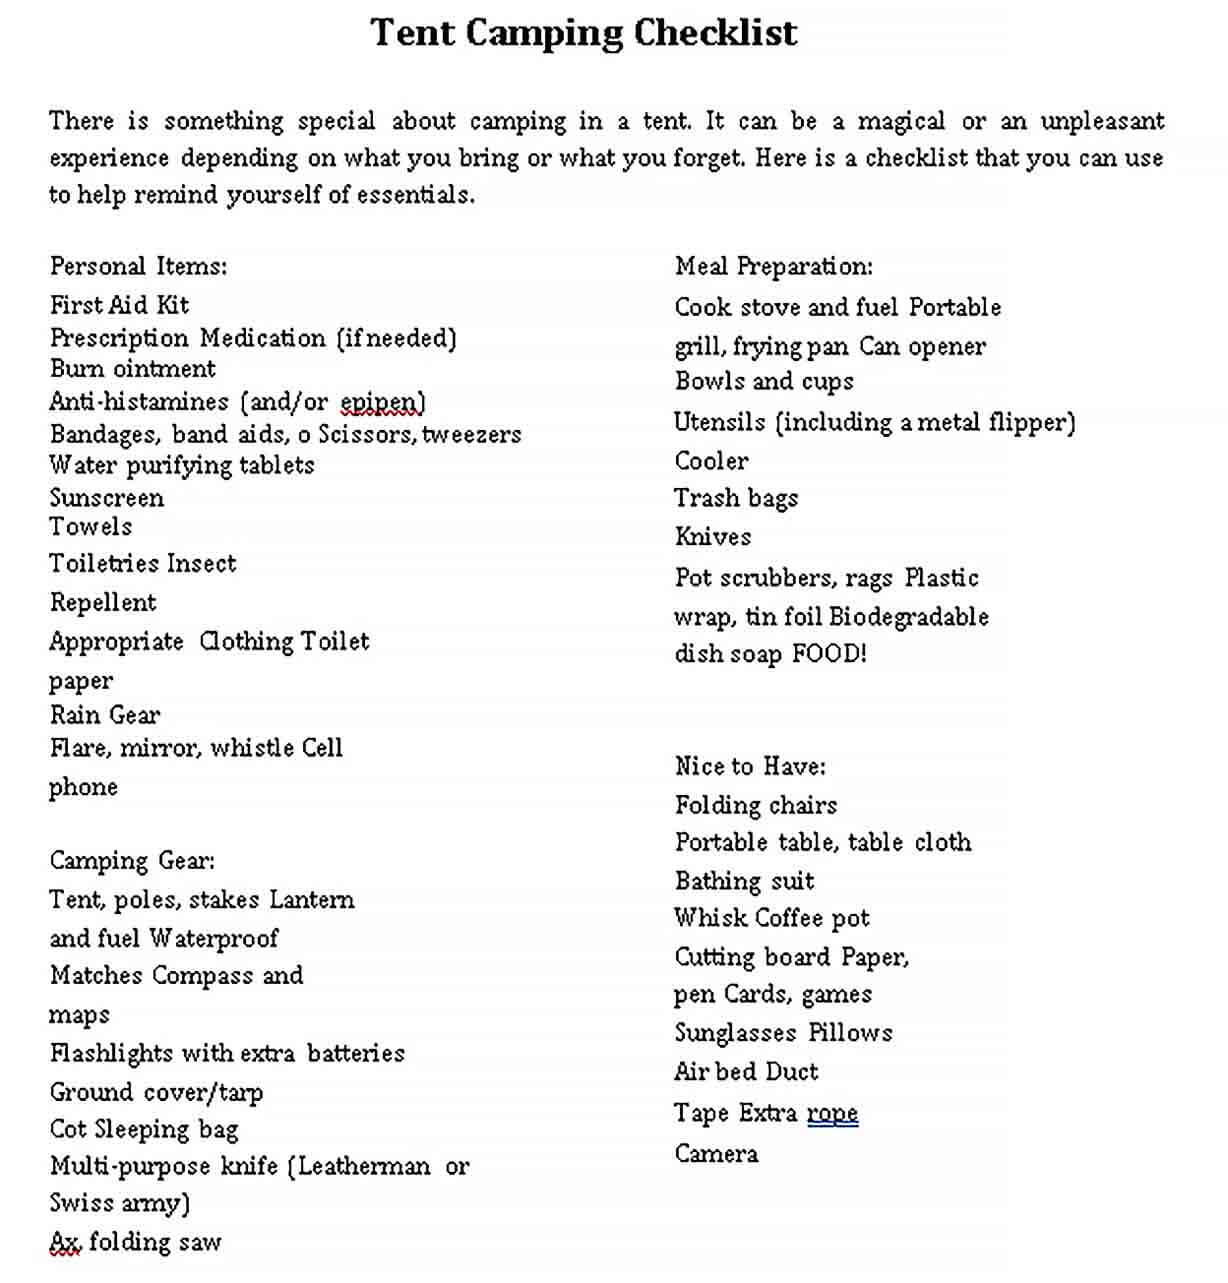 Sample Tent Camping Checklist PDF